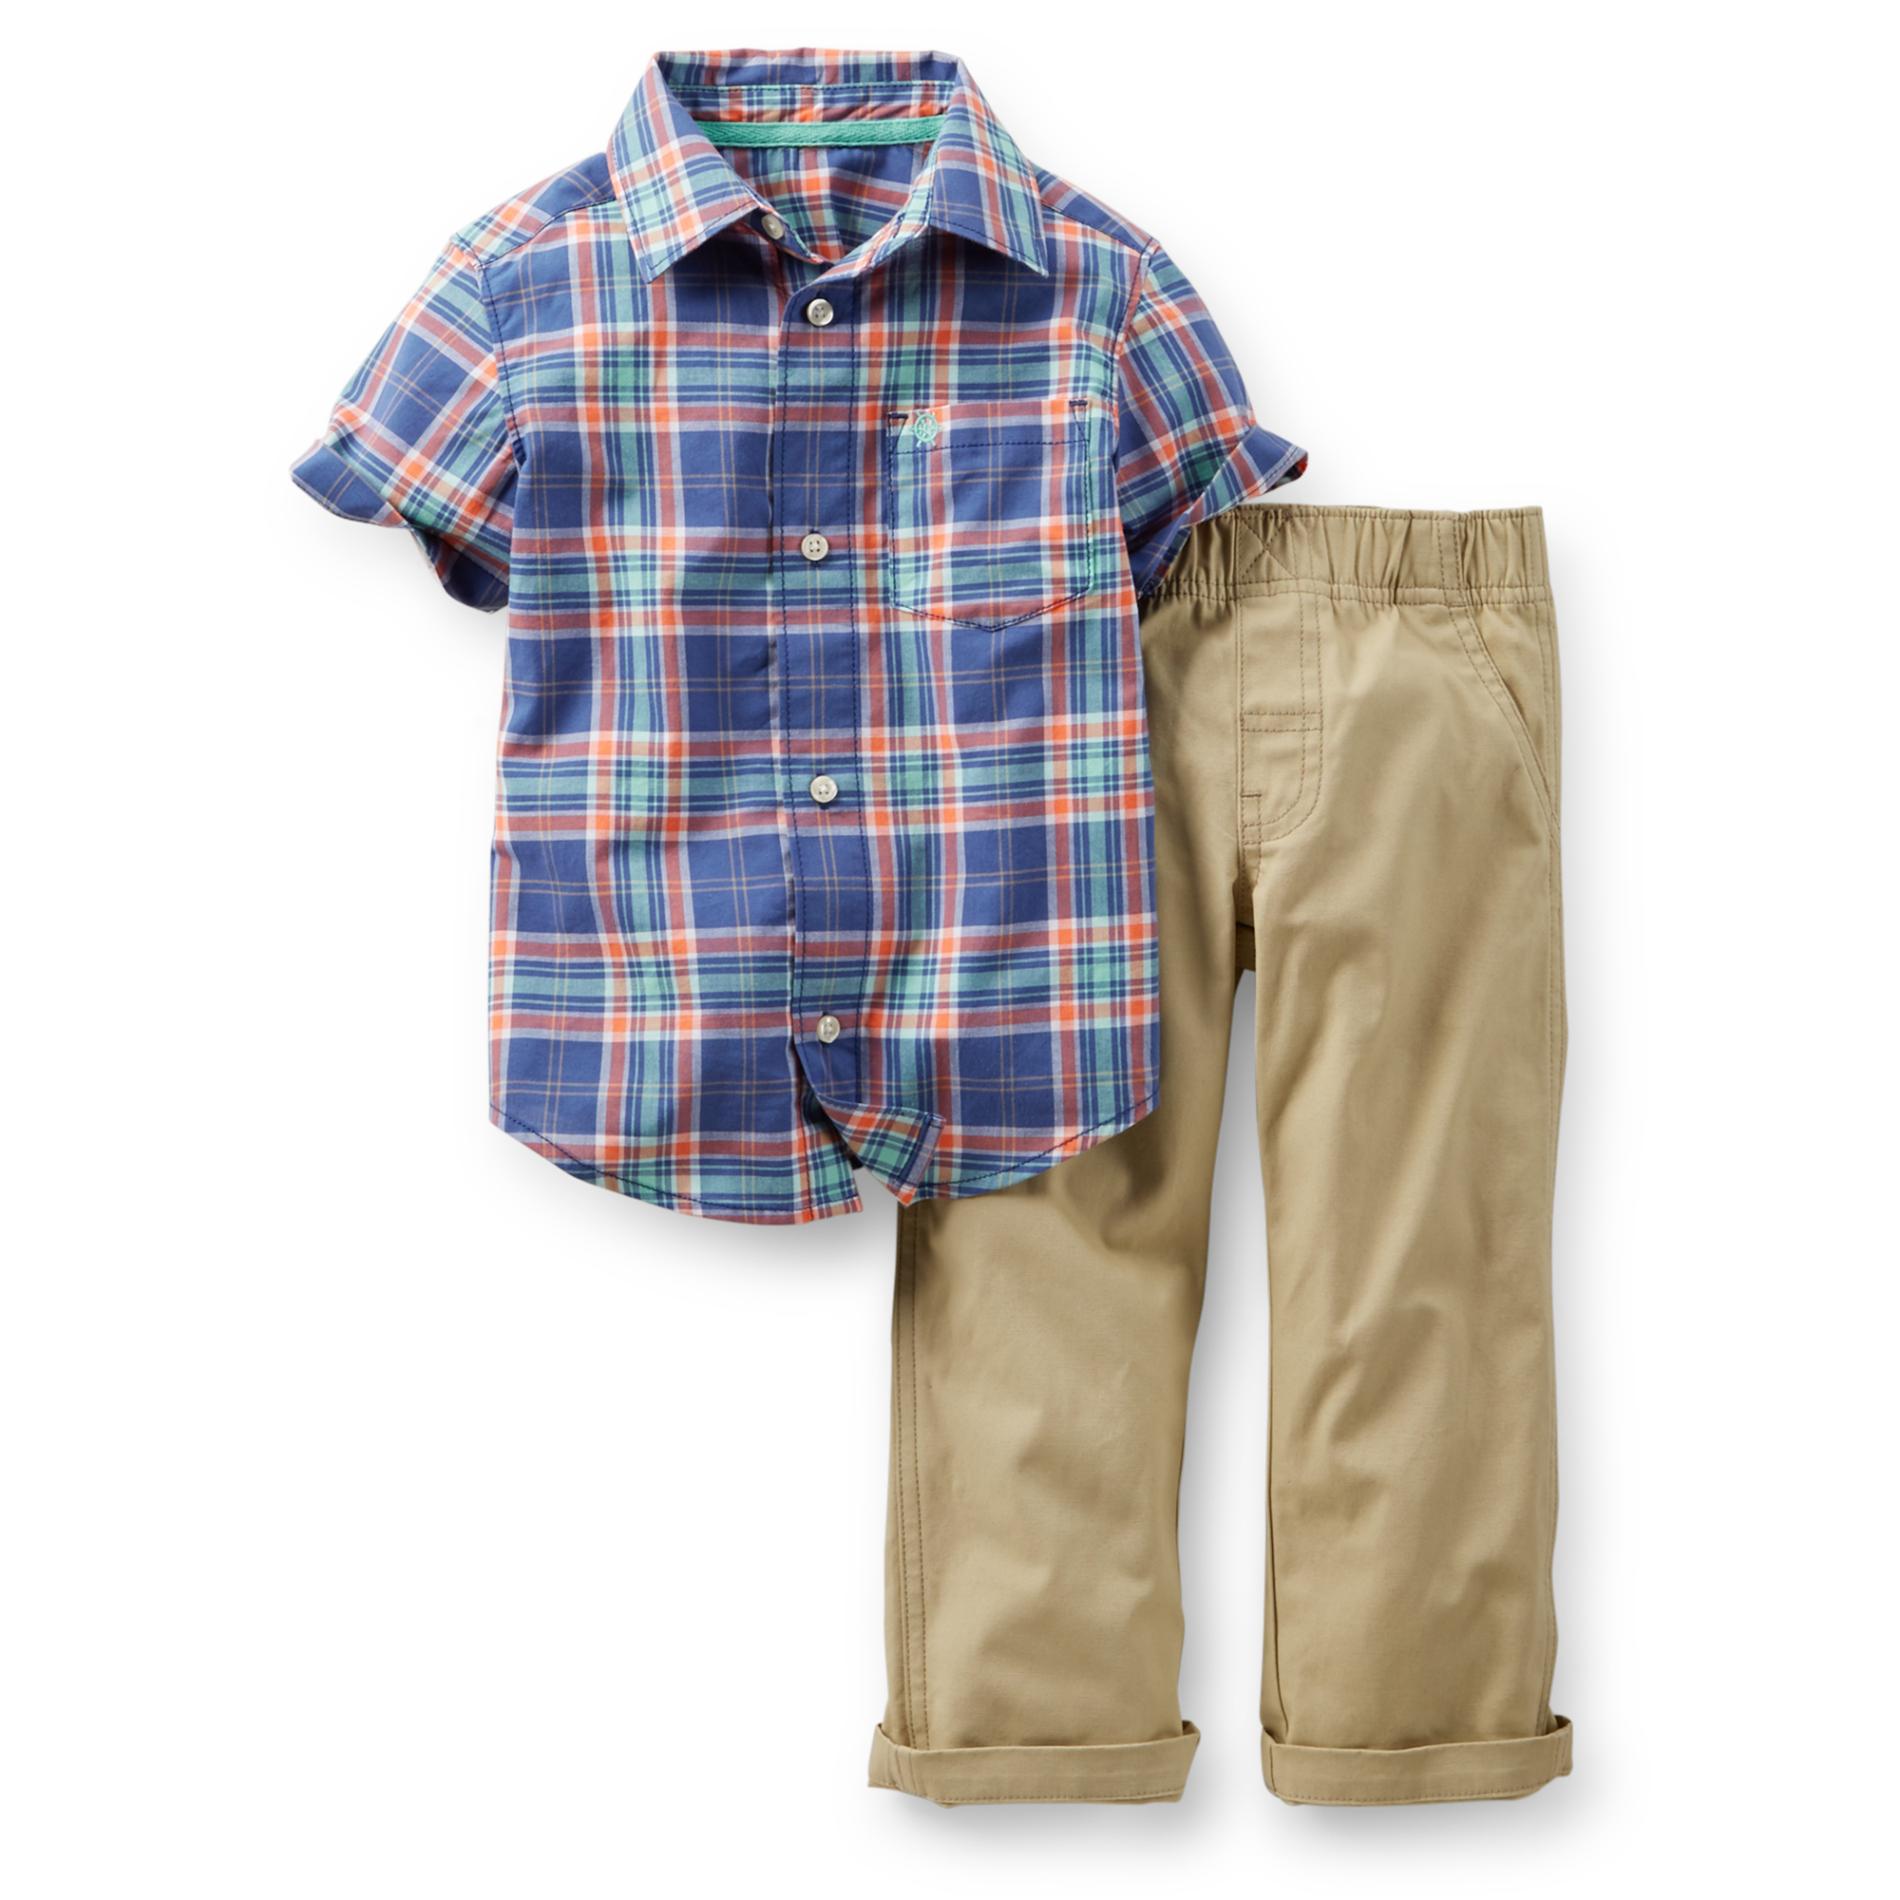 Carter's Toddler Boy's Button-Front Shirt & Pants - Plaid